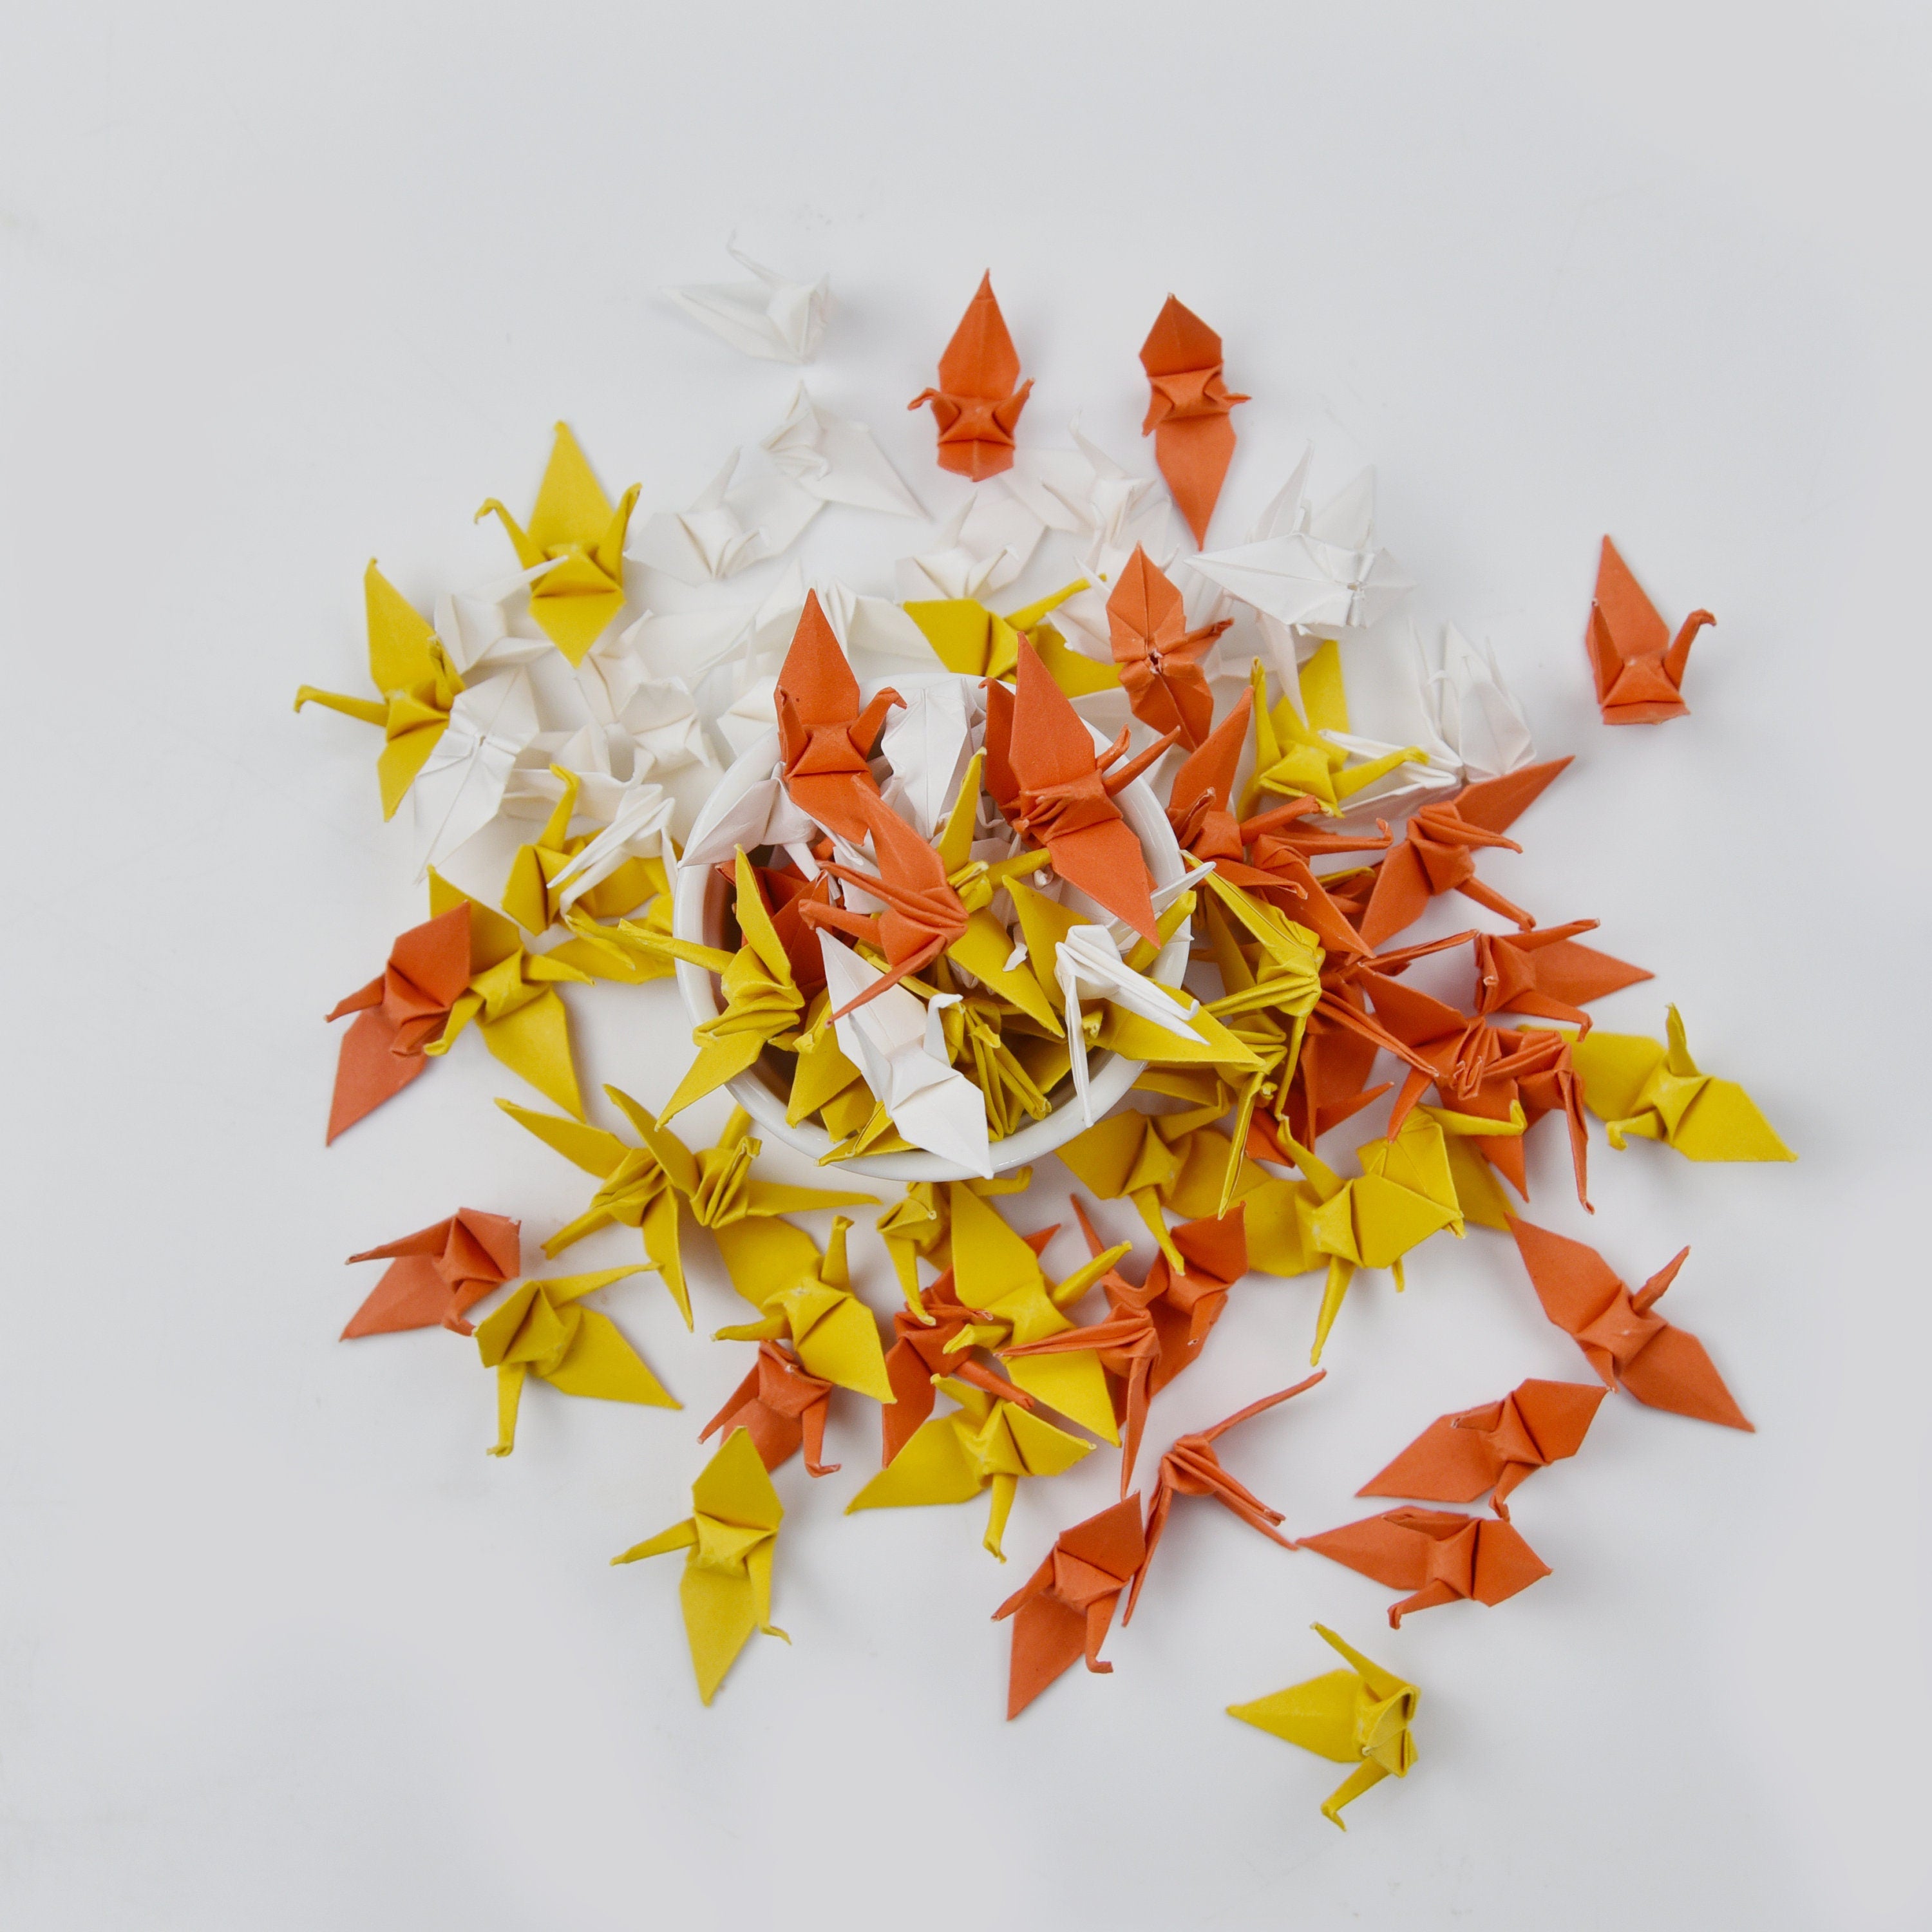 100 Grúas de papel de origami a la venta - 1,5 pulgadas - Tono naranja marfil japonés - para regalo de boda, decoración, telón de fondo de boda